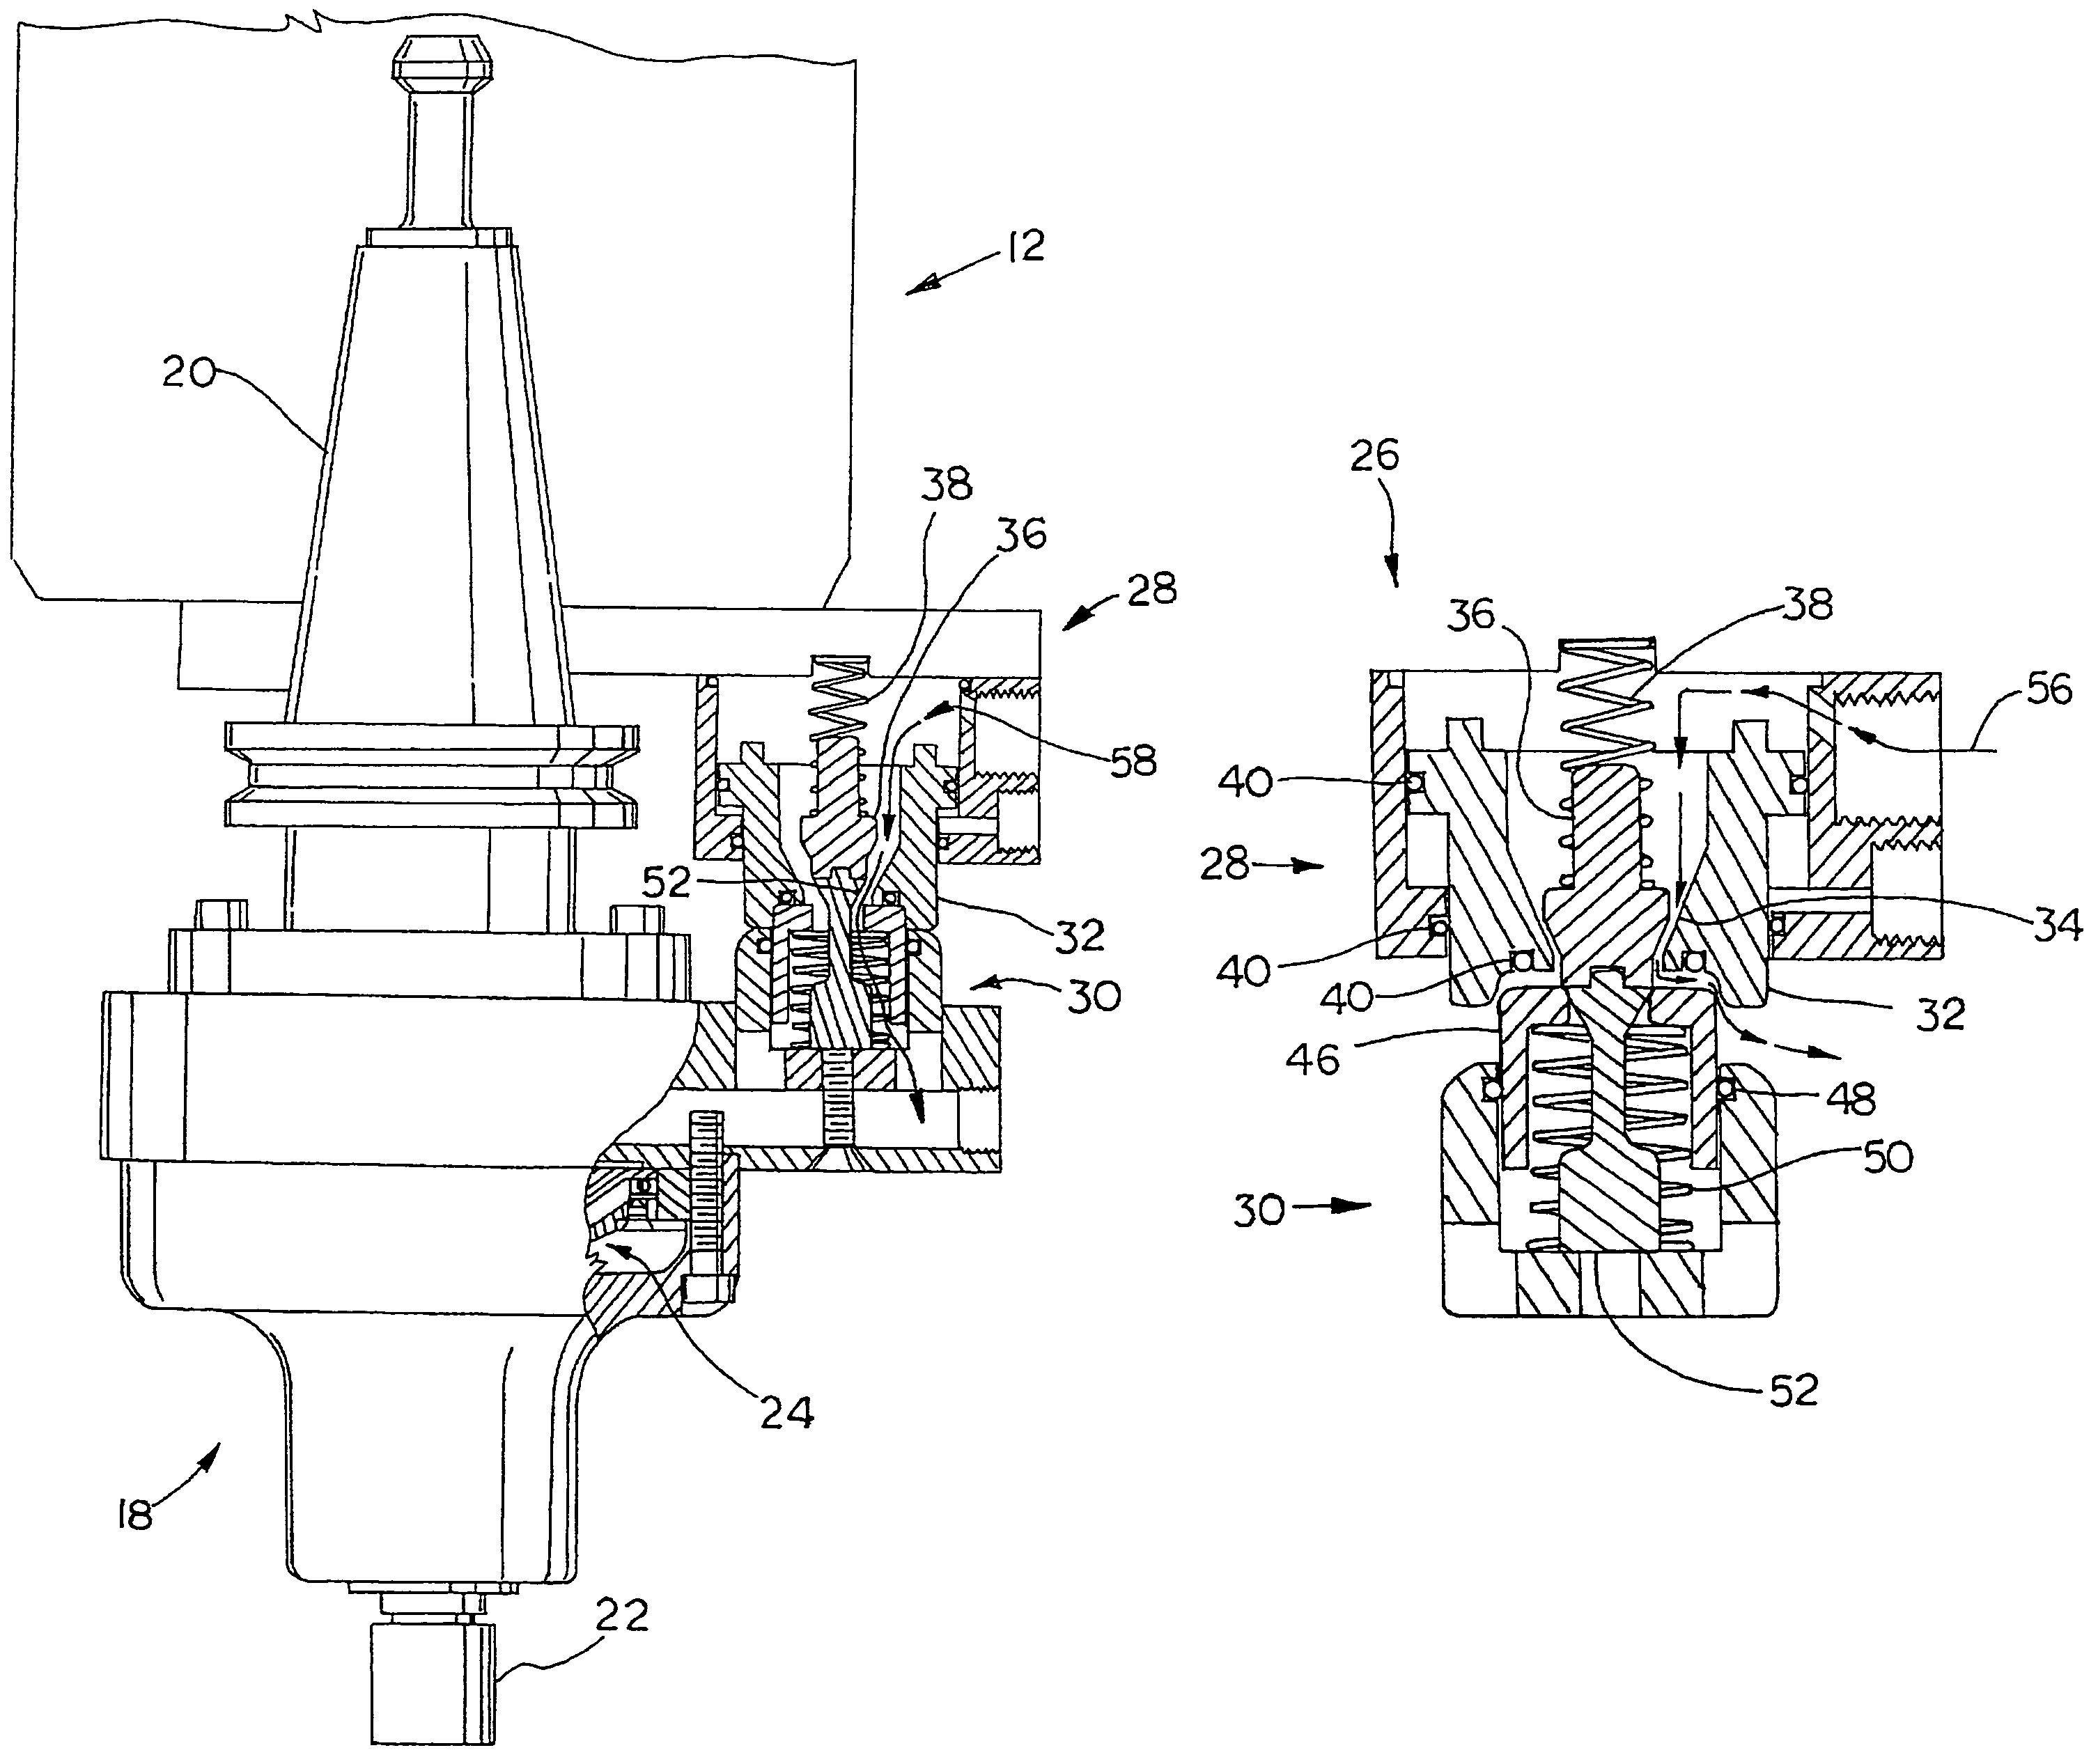 Air valve coupling method and apparatus